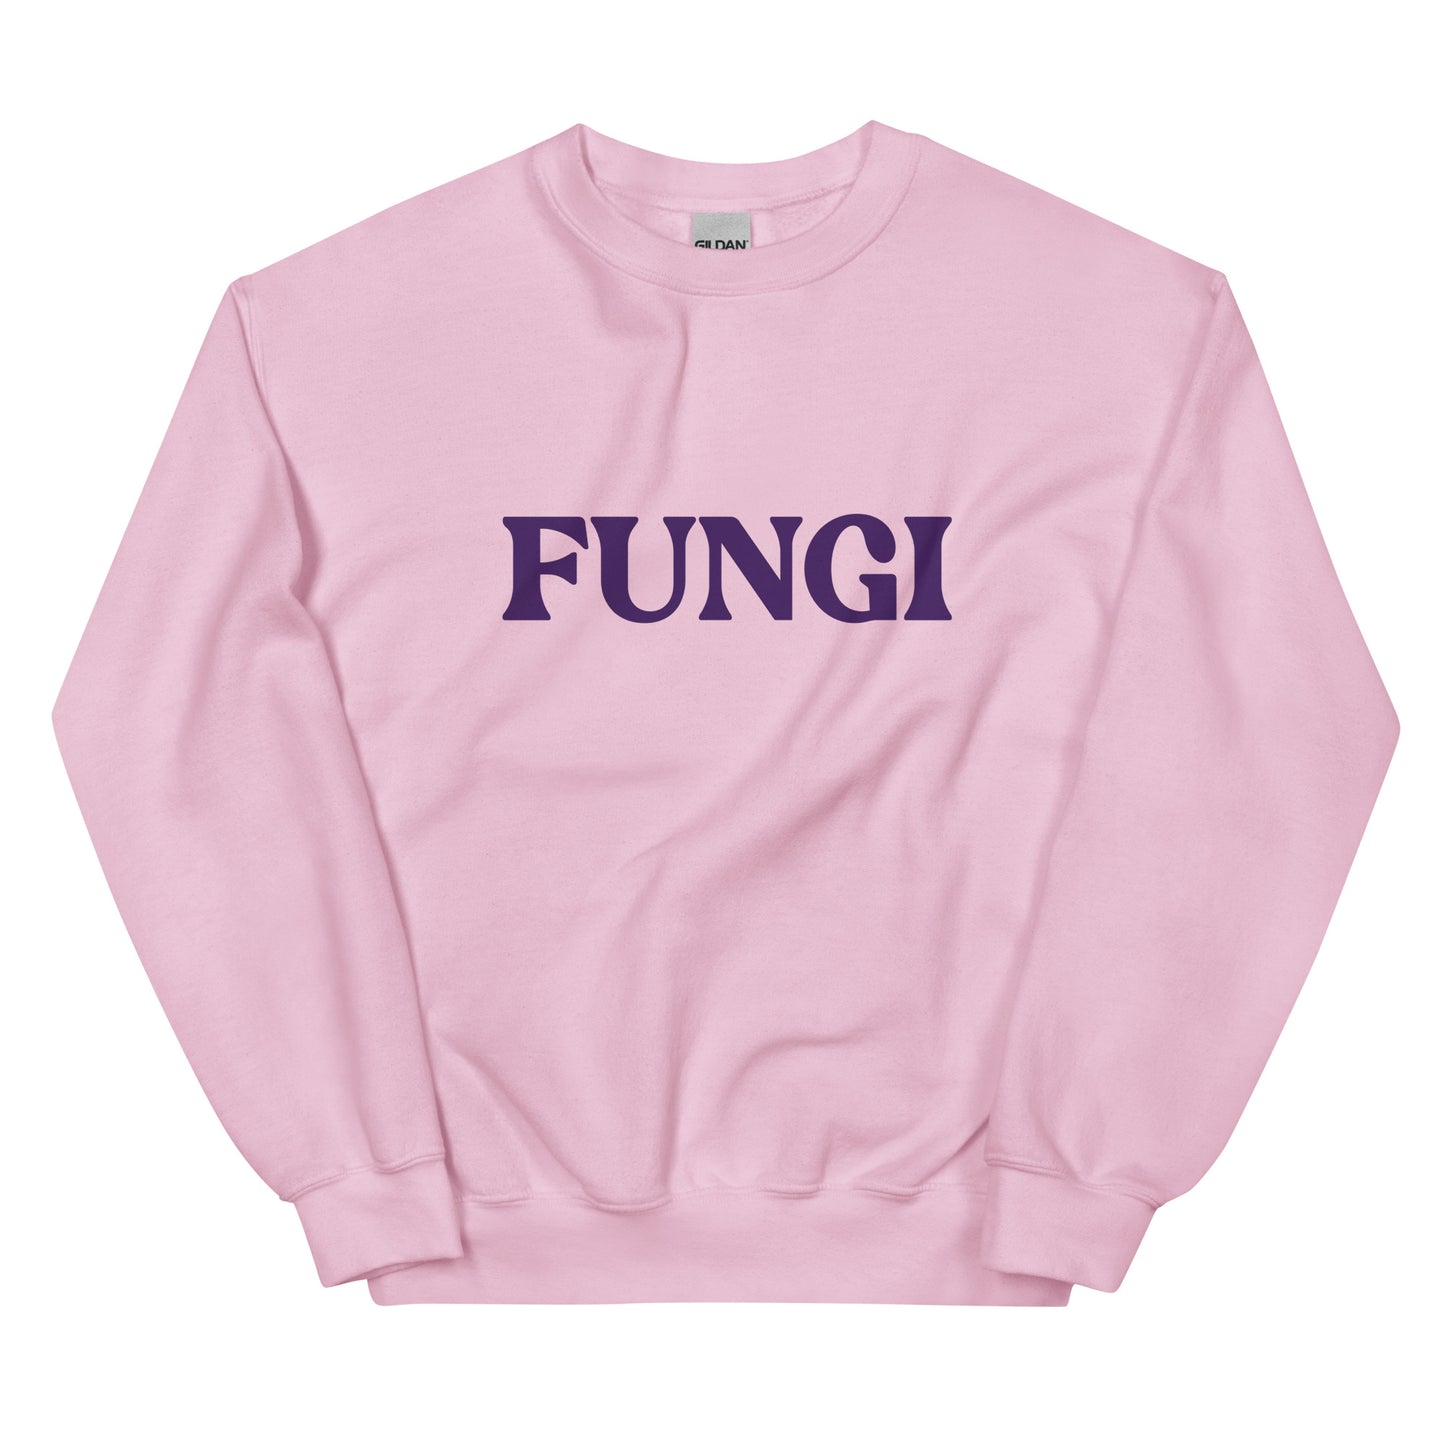 Fun Guy Graphic Unisex Sweatshirt